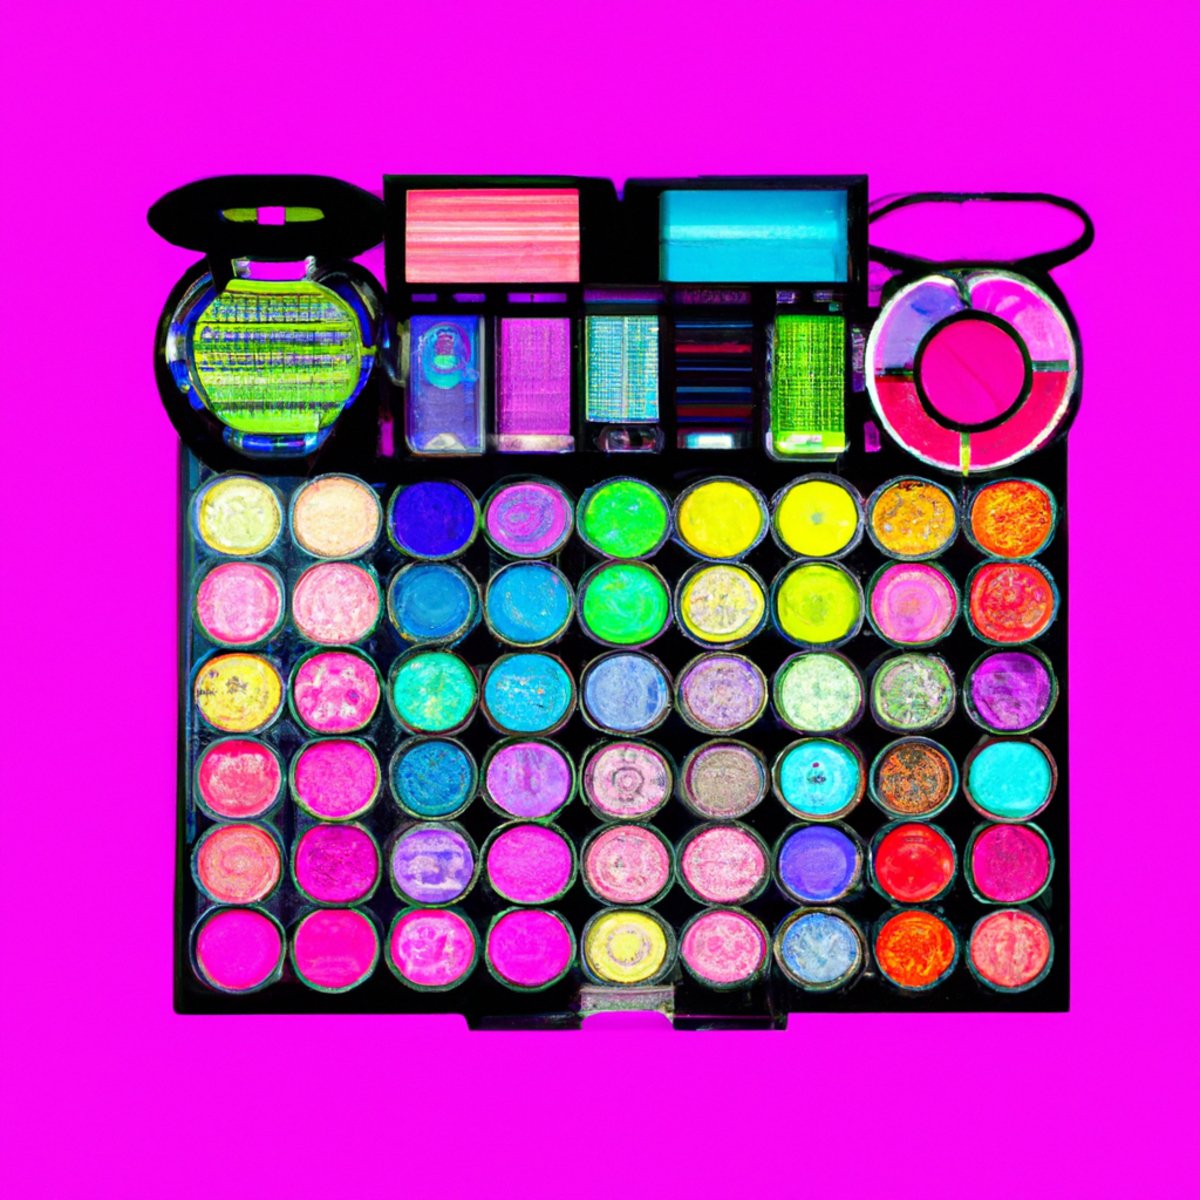 Mesmerizing array of neon makeup products on sleek surface, showcasing vibrant eyeshadow palettes, lipsticks, nail polishes, and artistic brushes.